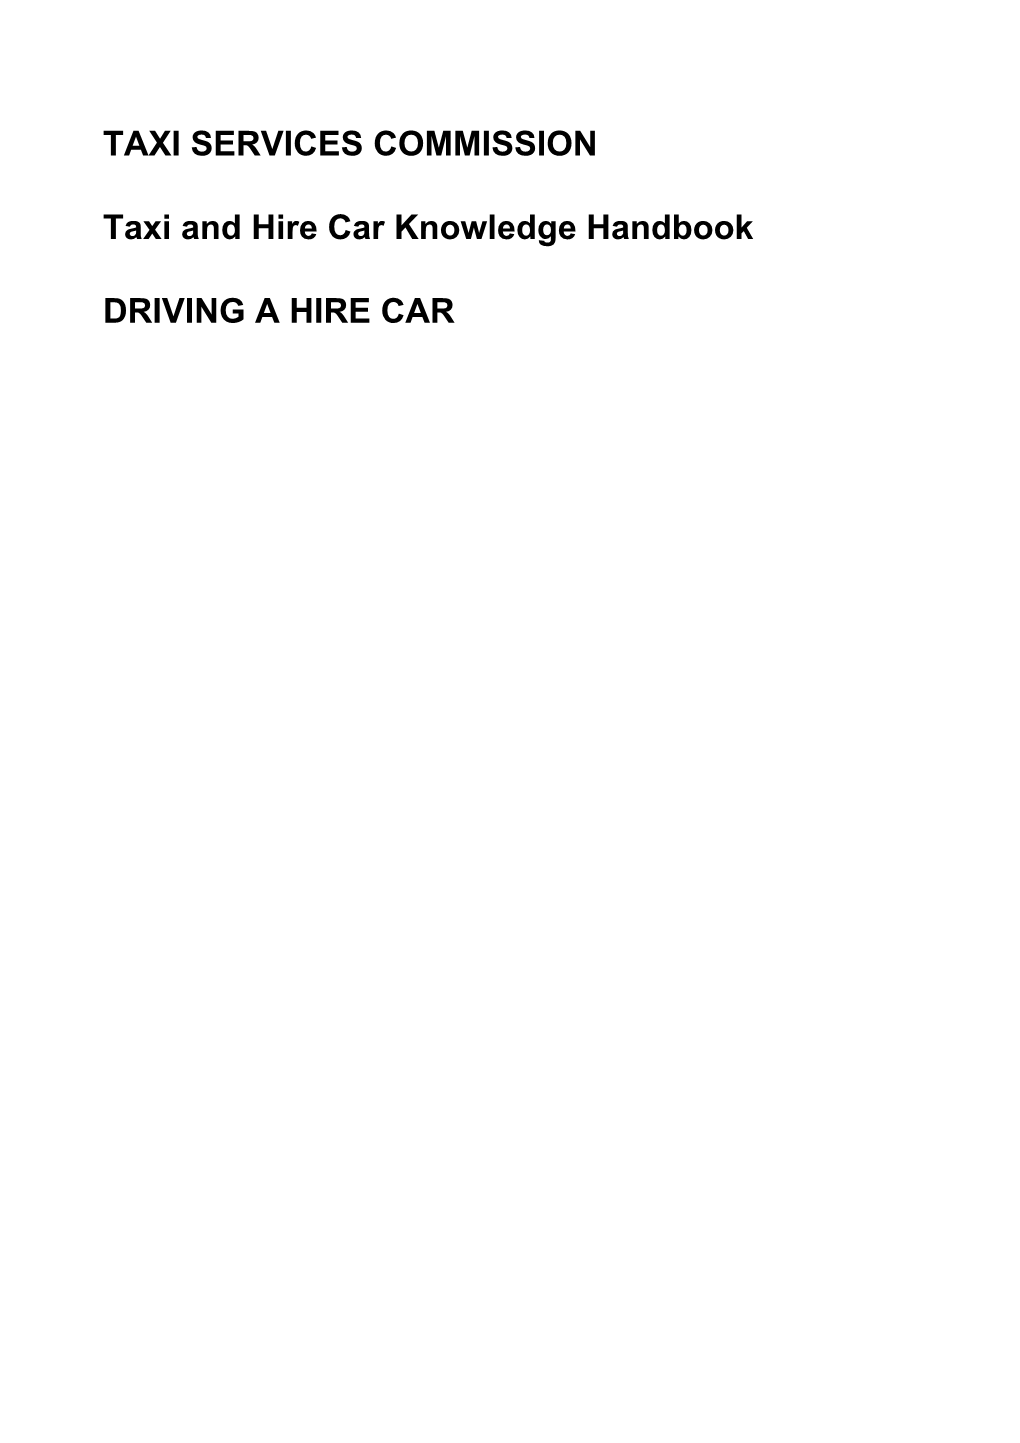 Knowledge Handbook - Driving a Hire Car